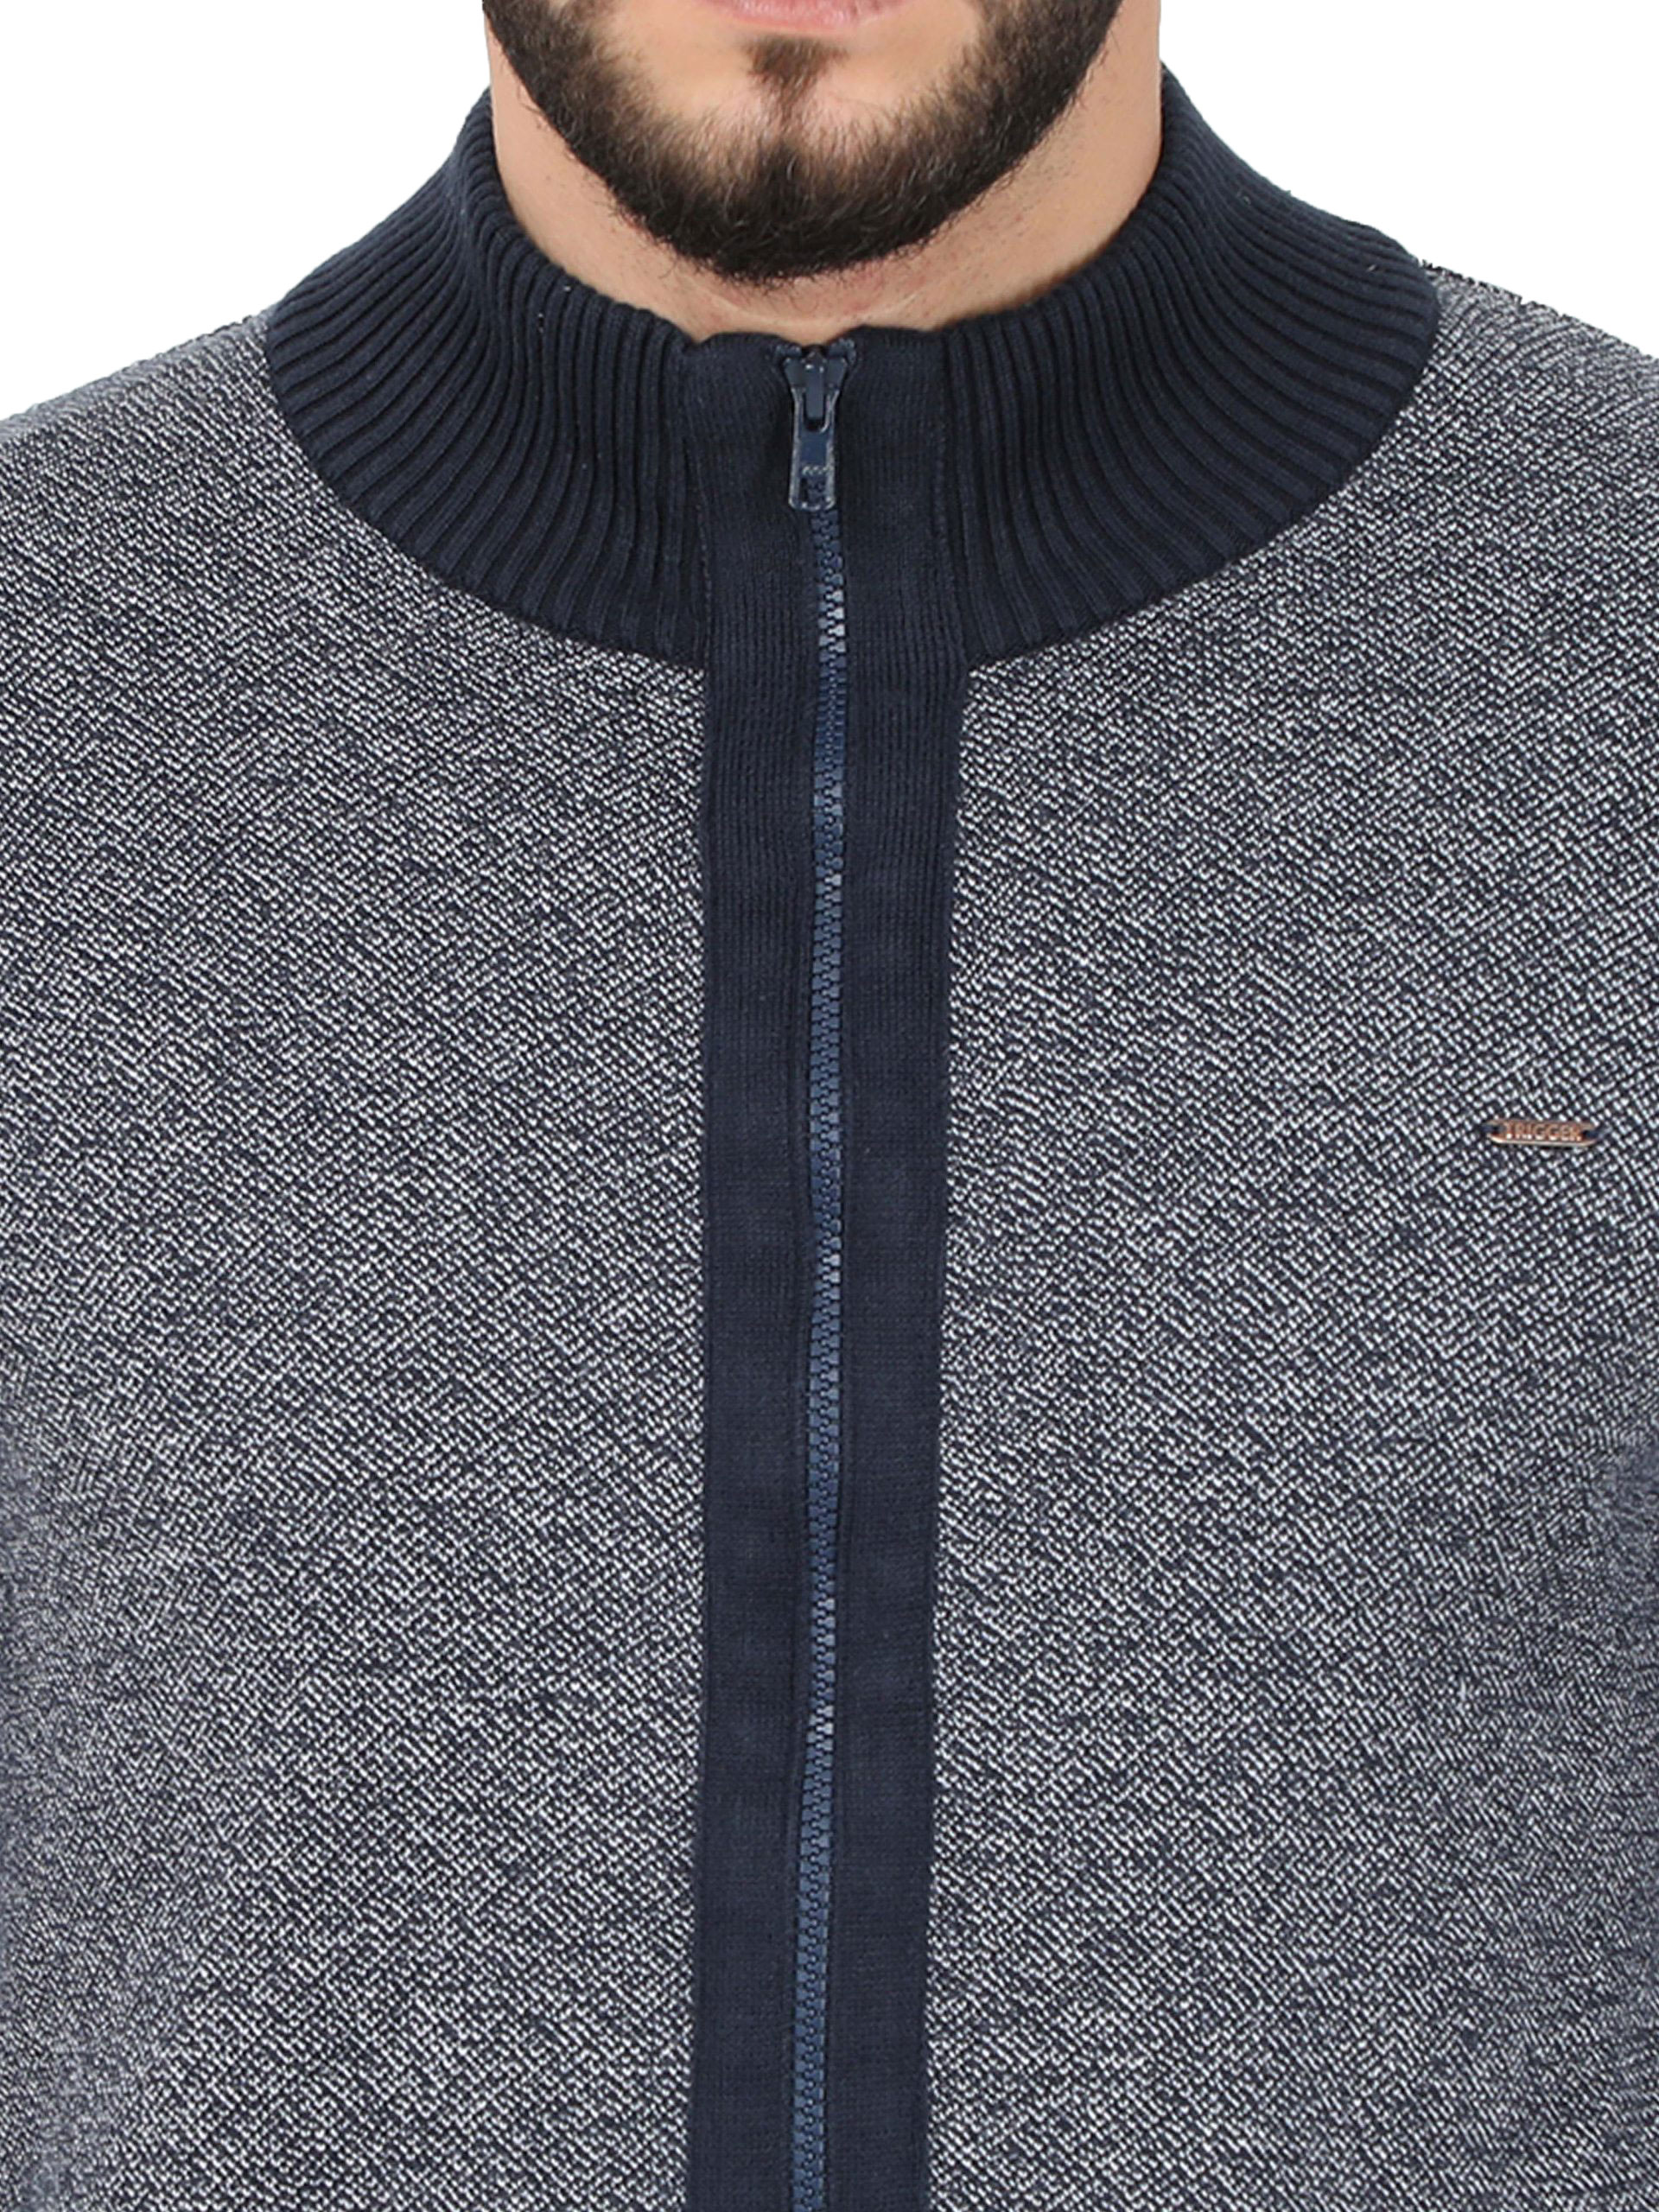 Sweatshirt Zipper Full Sleeve Grey/Navy